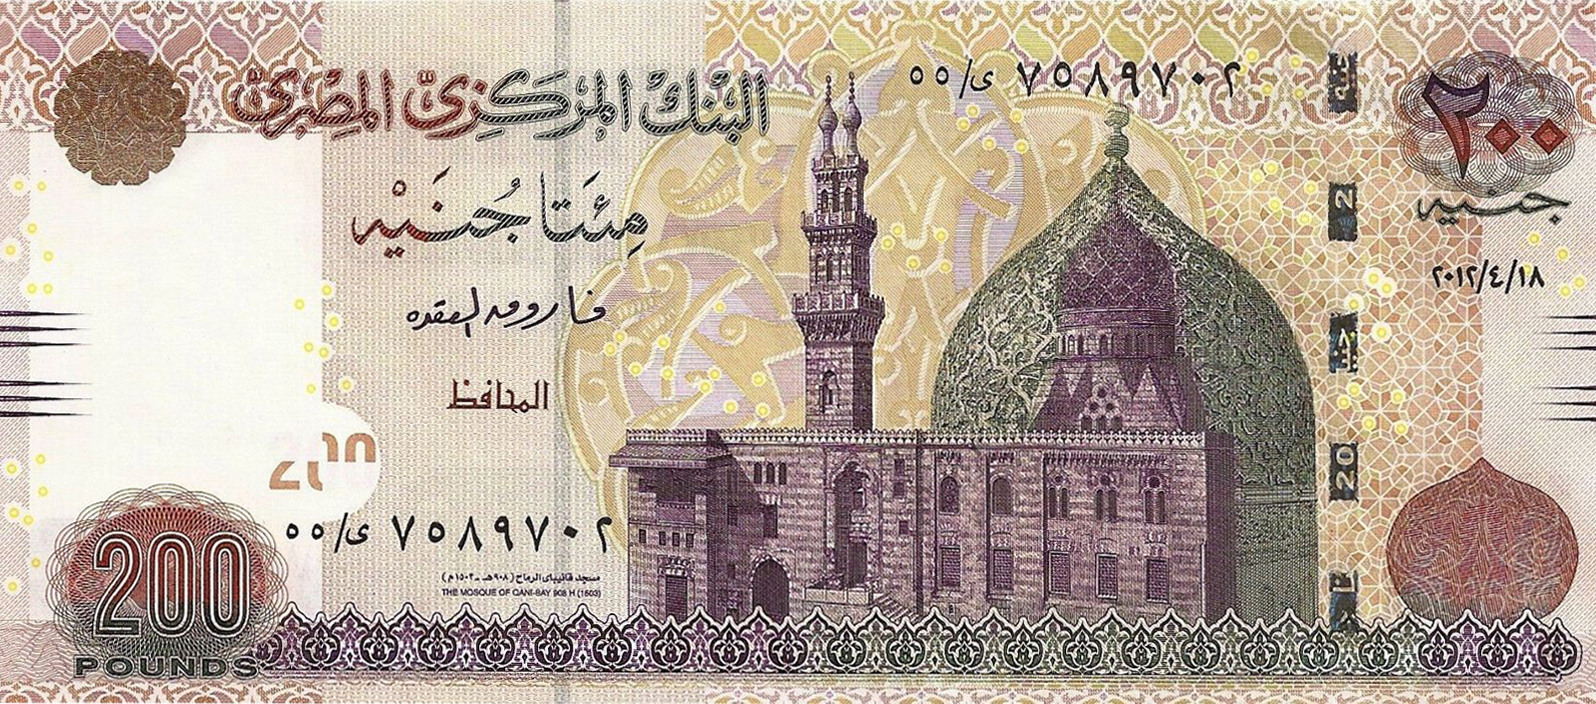 Obverse of banknote 200 Egyptian pound